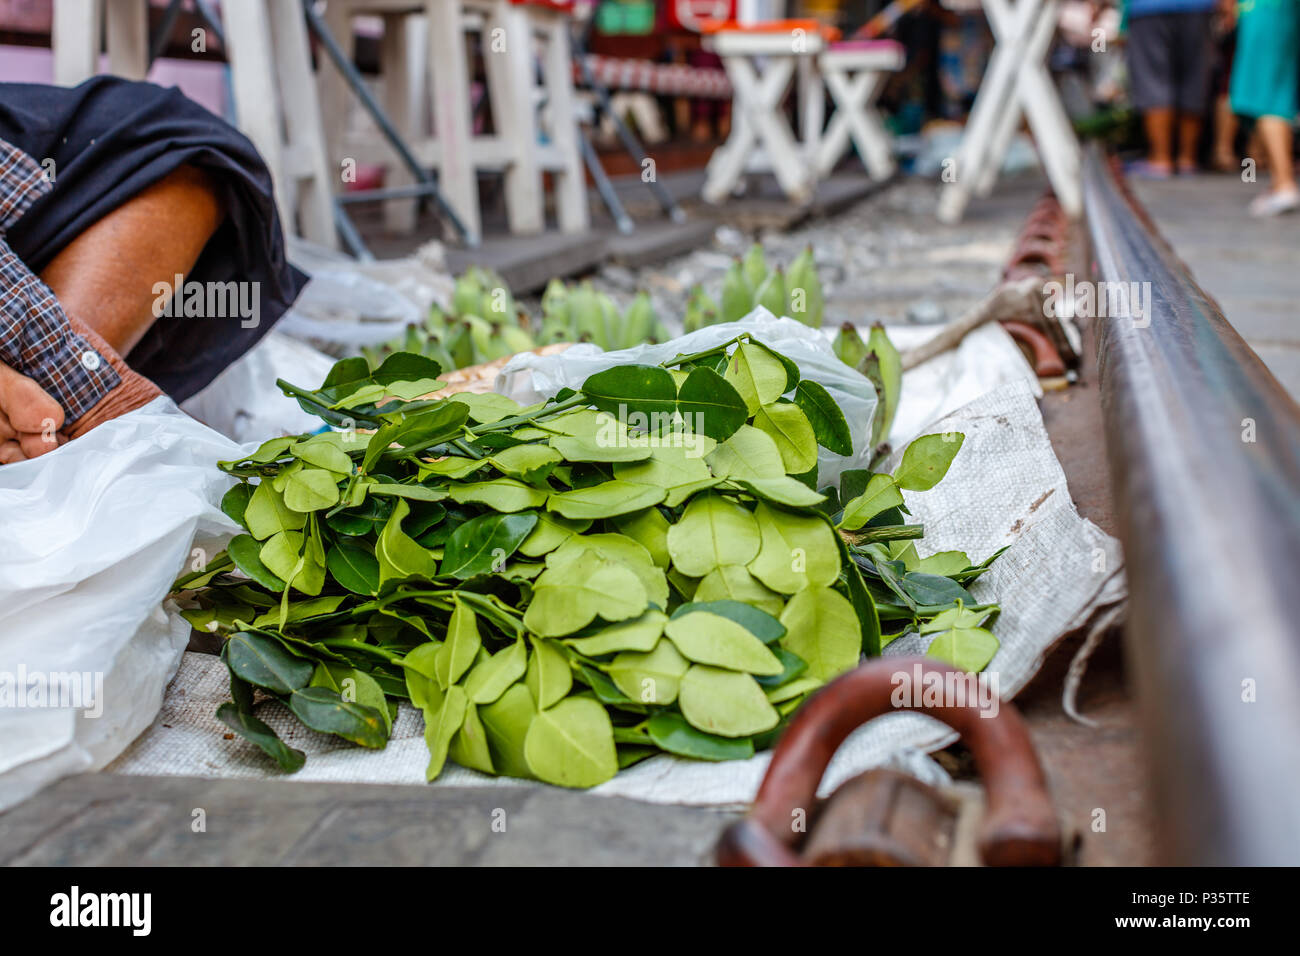 Straßenhändler verkaufen kaffernlimette Blätter zum Kochen am berühmten Maeklong Railway Markt. Samut Songkhram Thailand Stockfoto